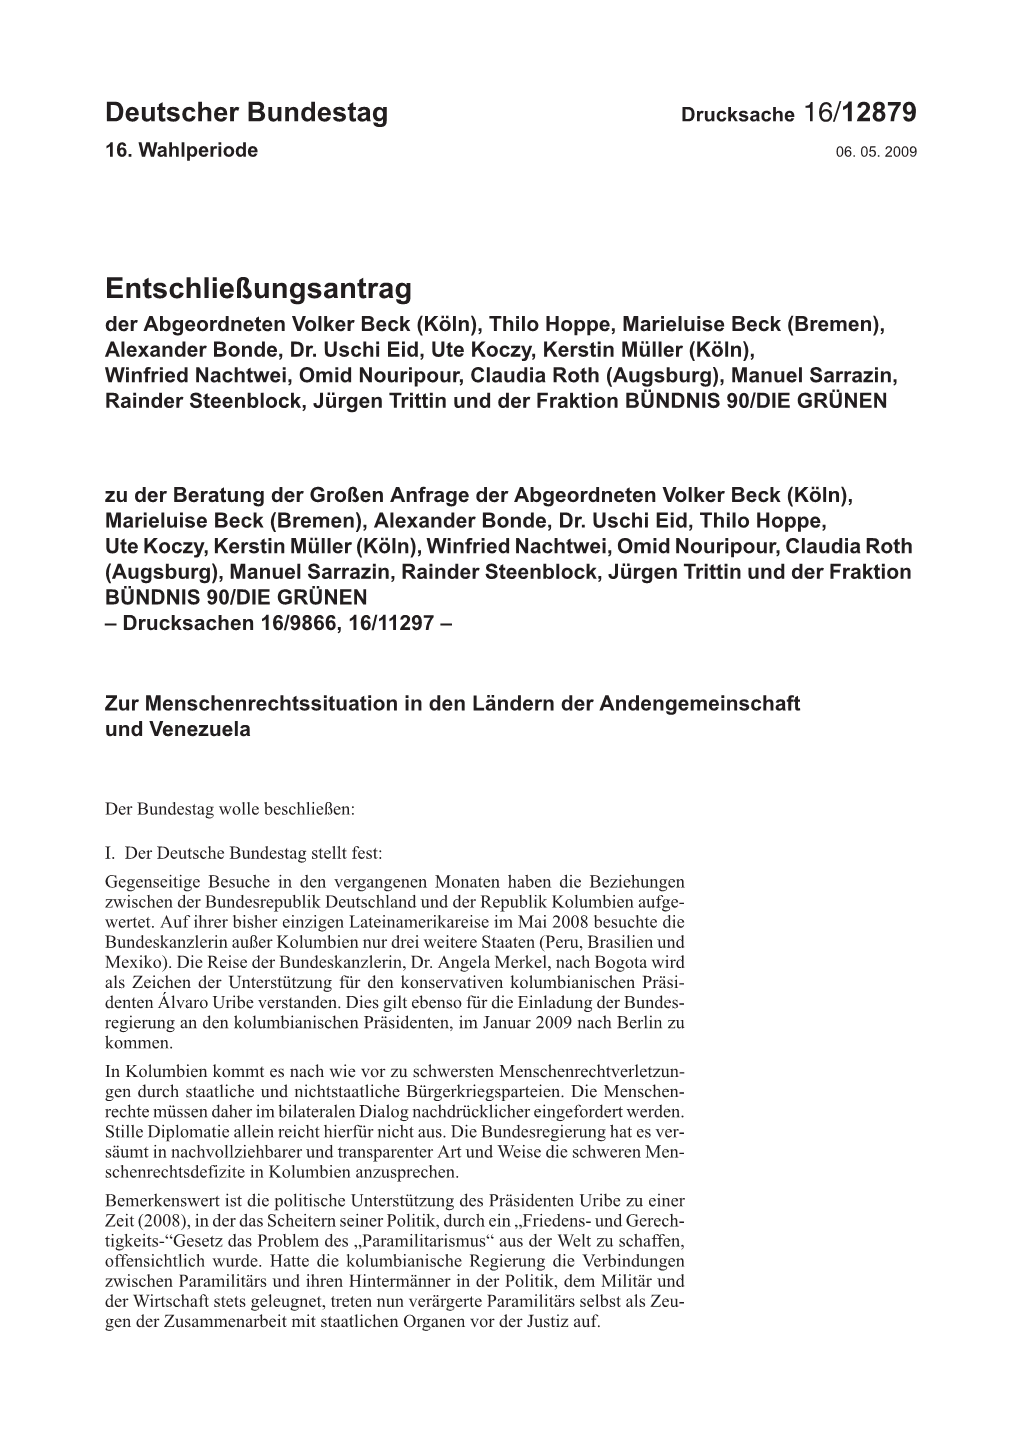 Entschließungsantrag Der Abgeordneten Volker Beck (Köln), Thilo Hoppe, Marieluise Beck (Bremen), Alexander Bonde, Dr